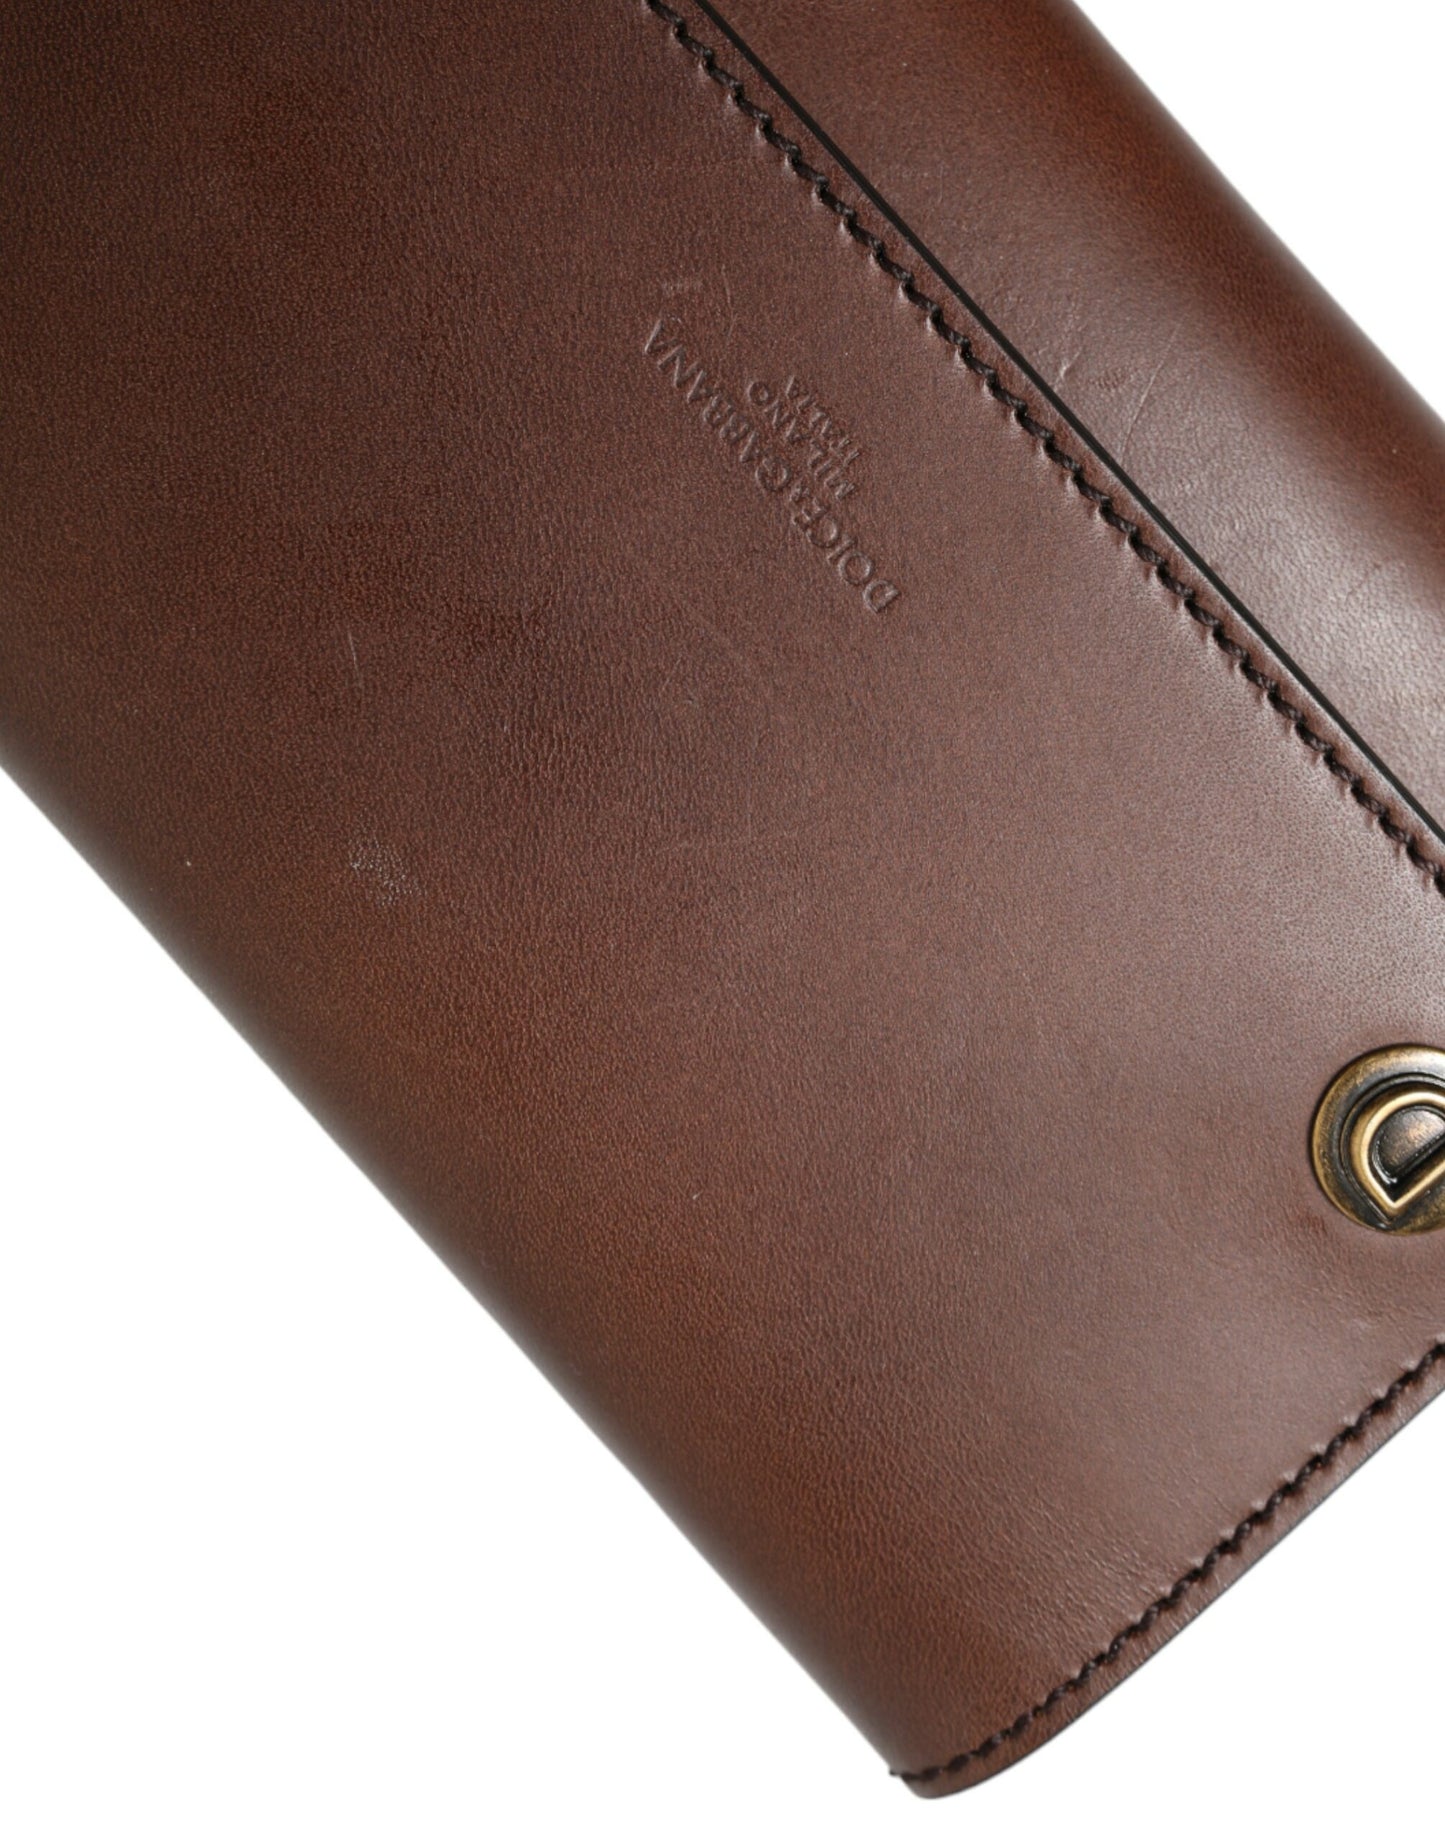 Dolce & Gabbana Chic Brown Leather Shoulder Bag with Gold Detailing - DEA STILOSA MILANO